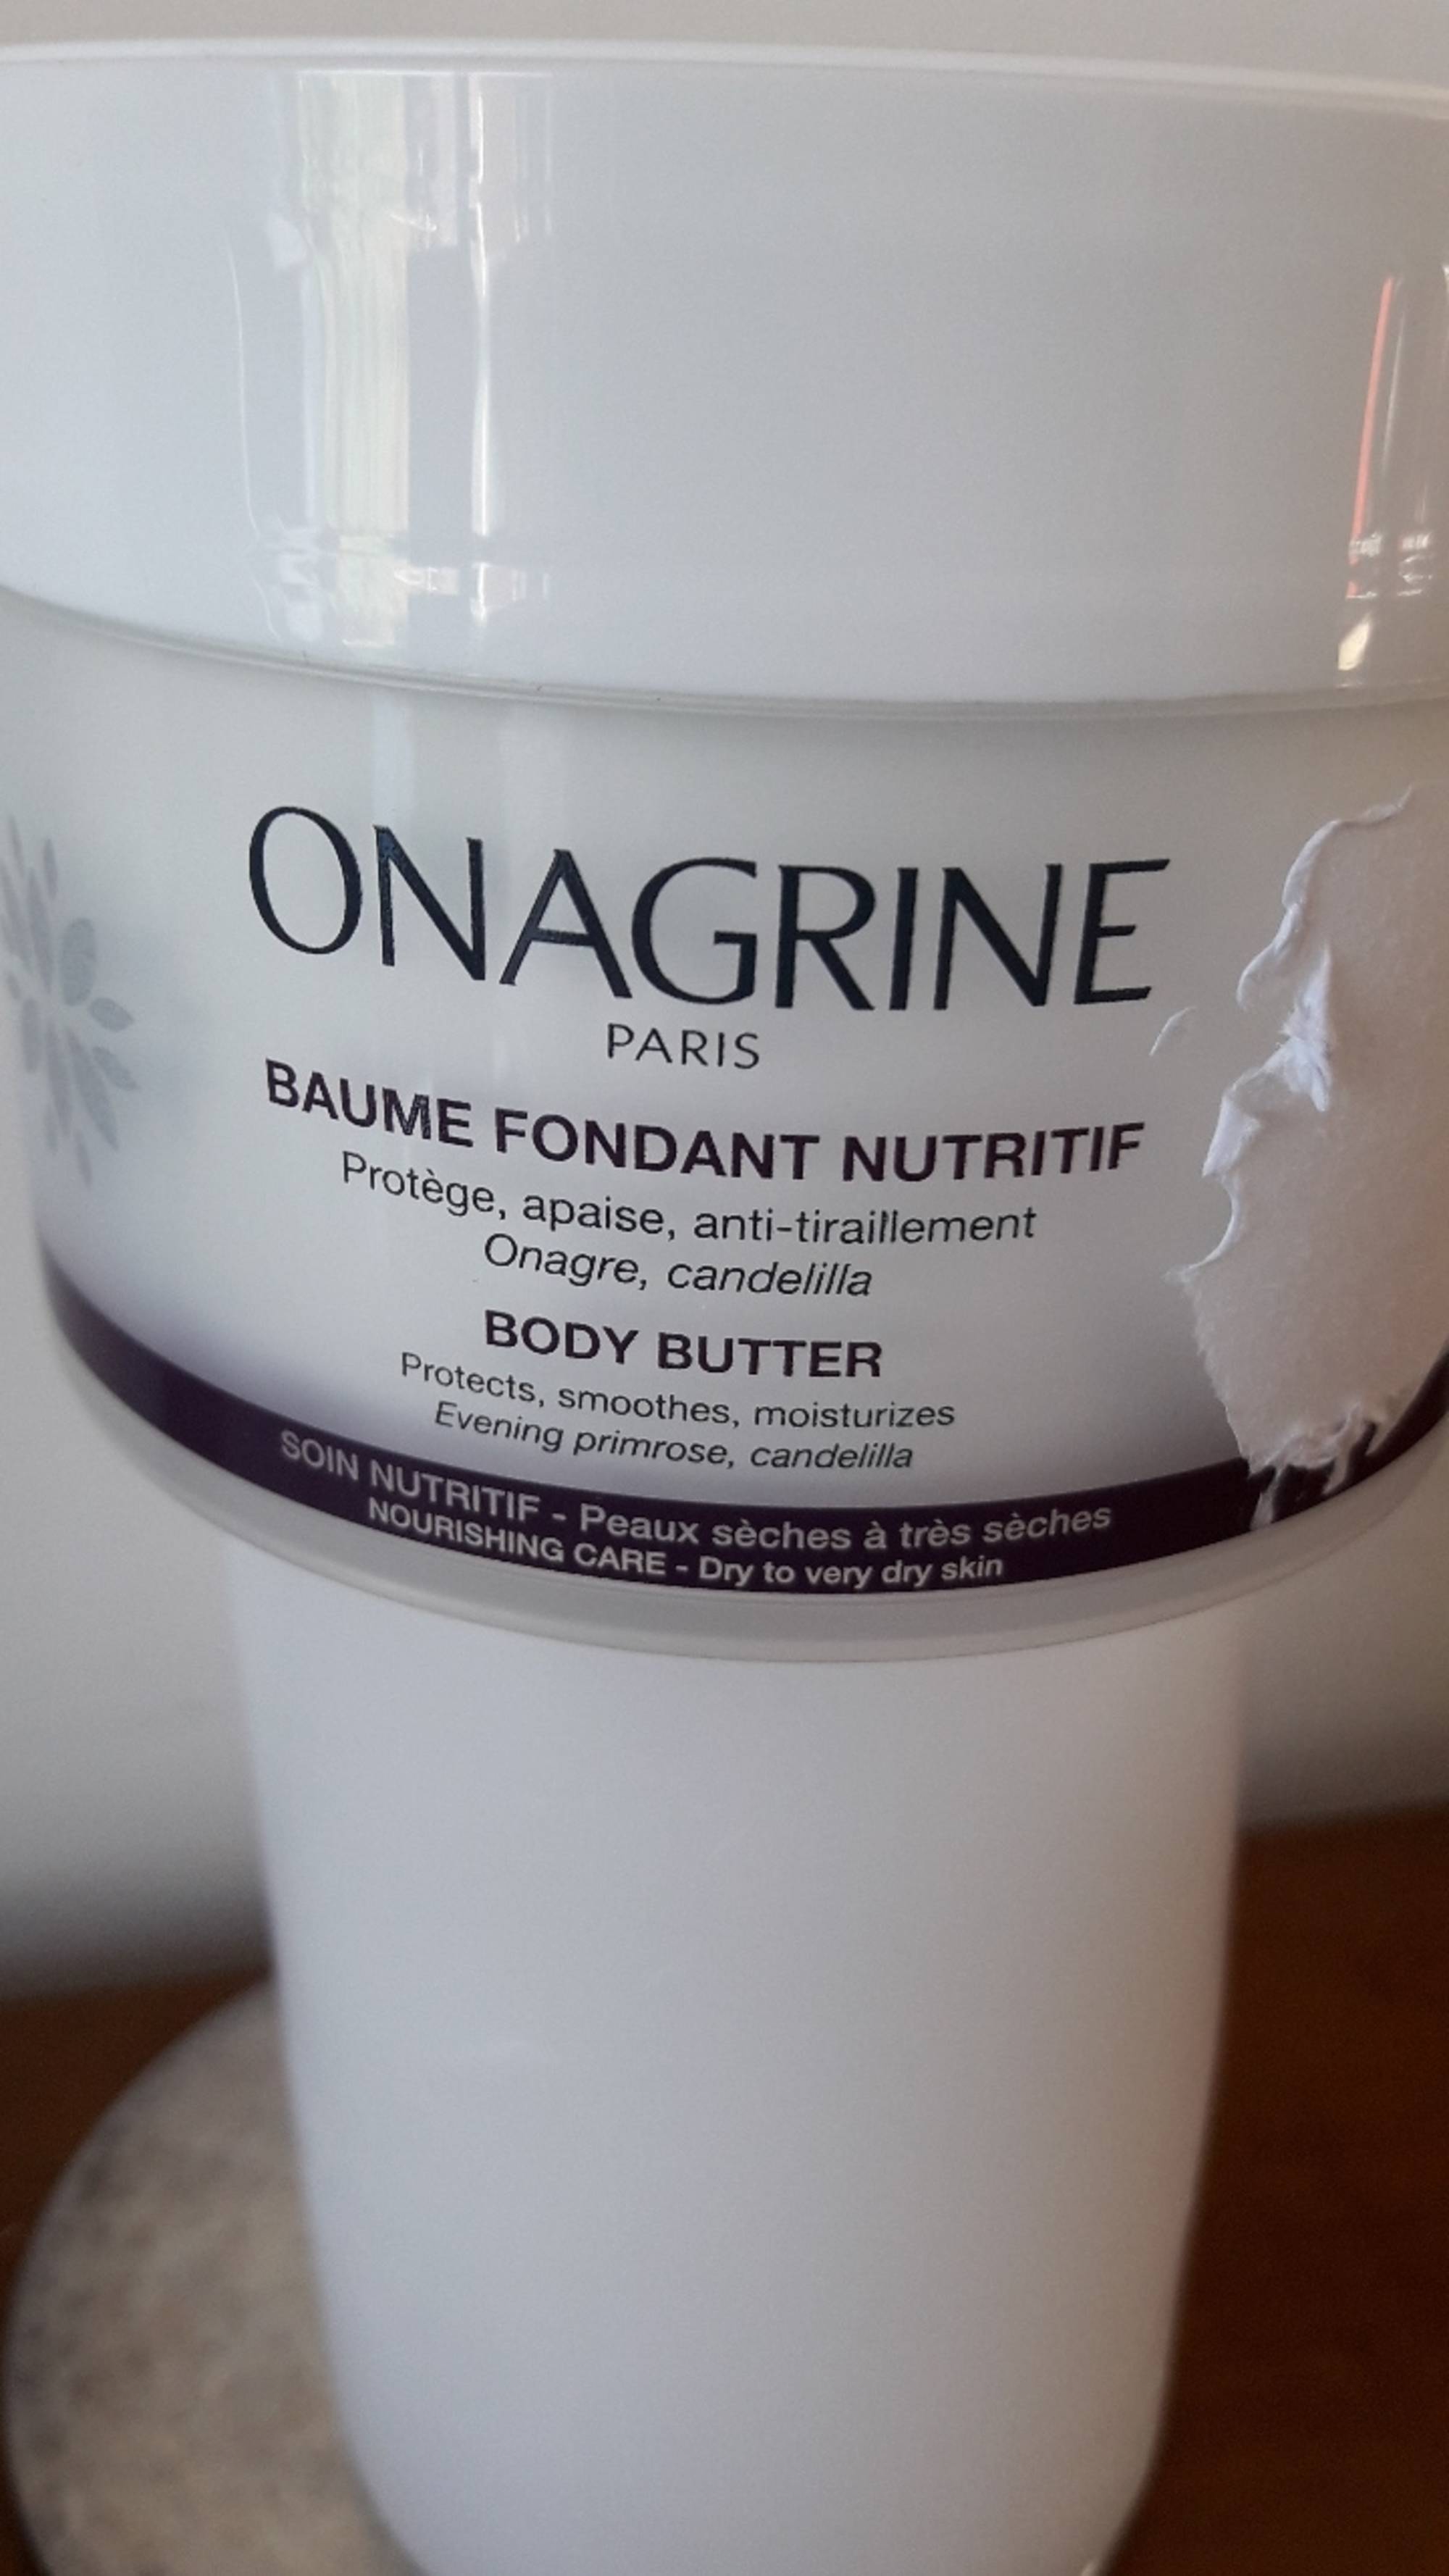 ONAGRINE - Baume fondant nutritif